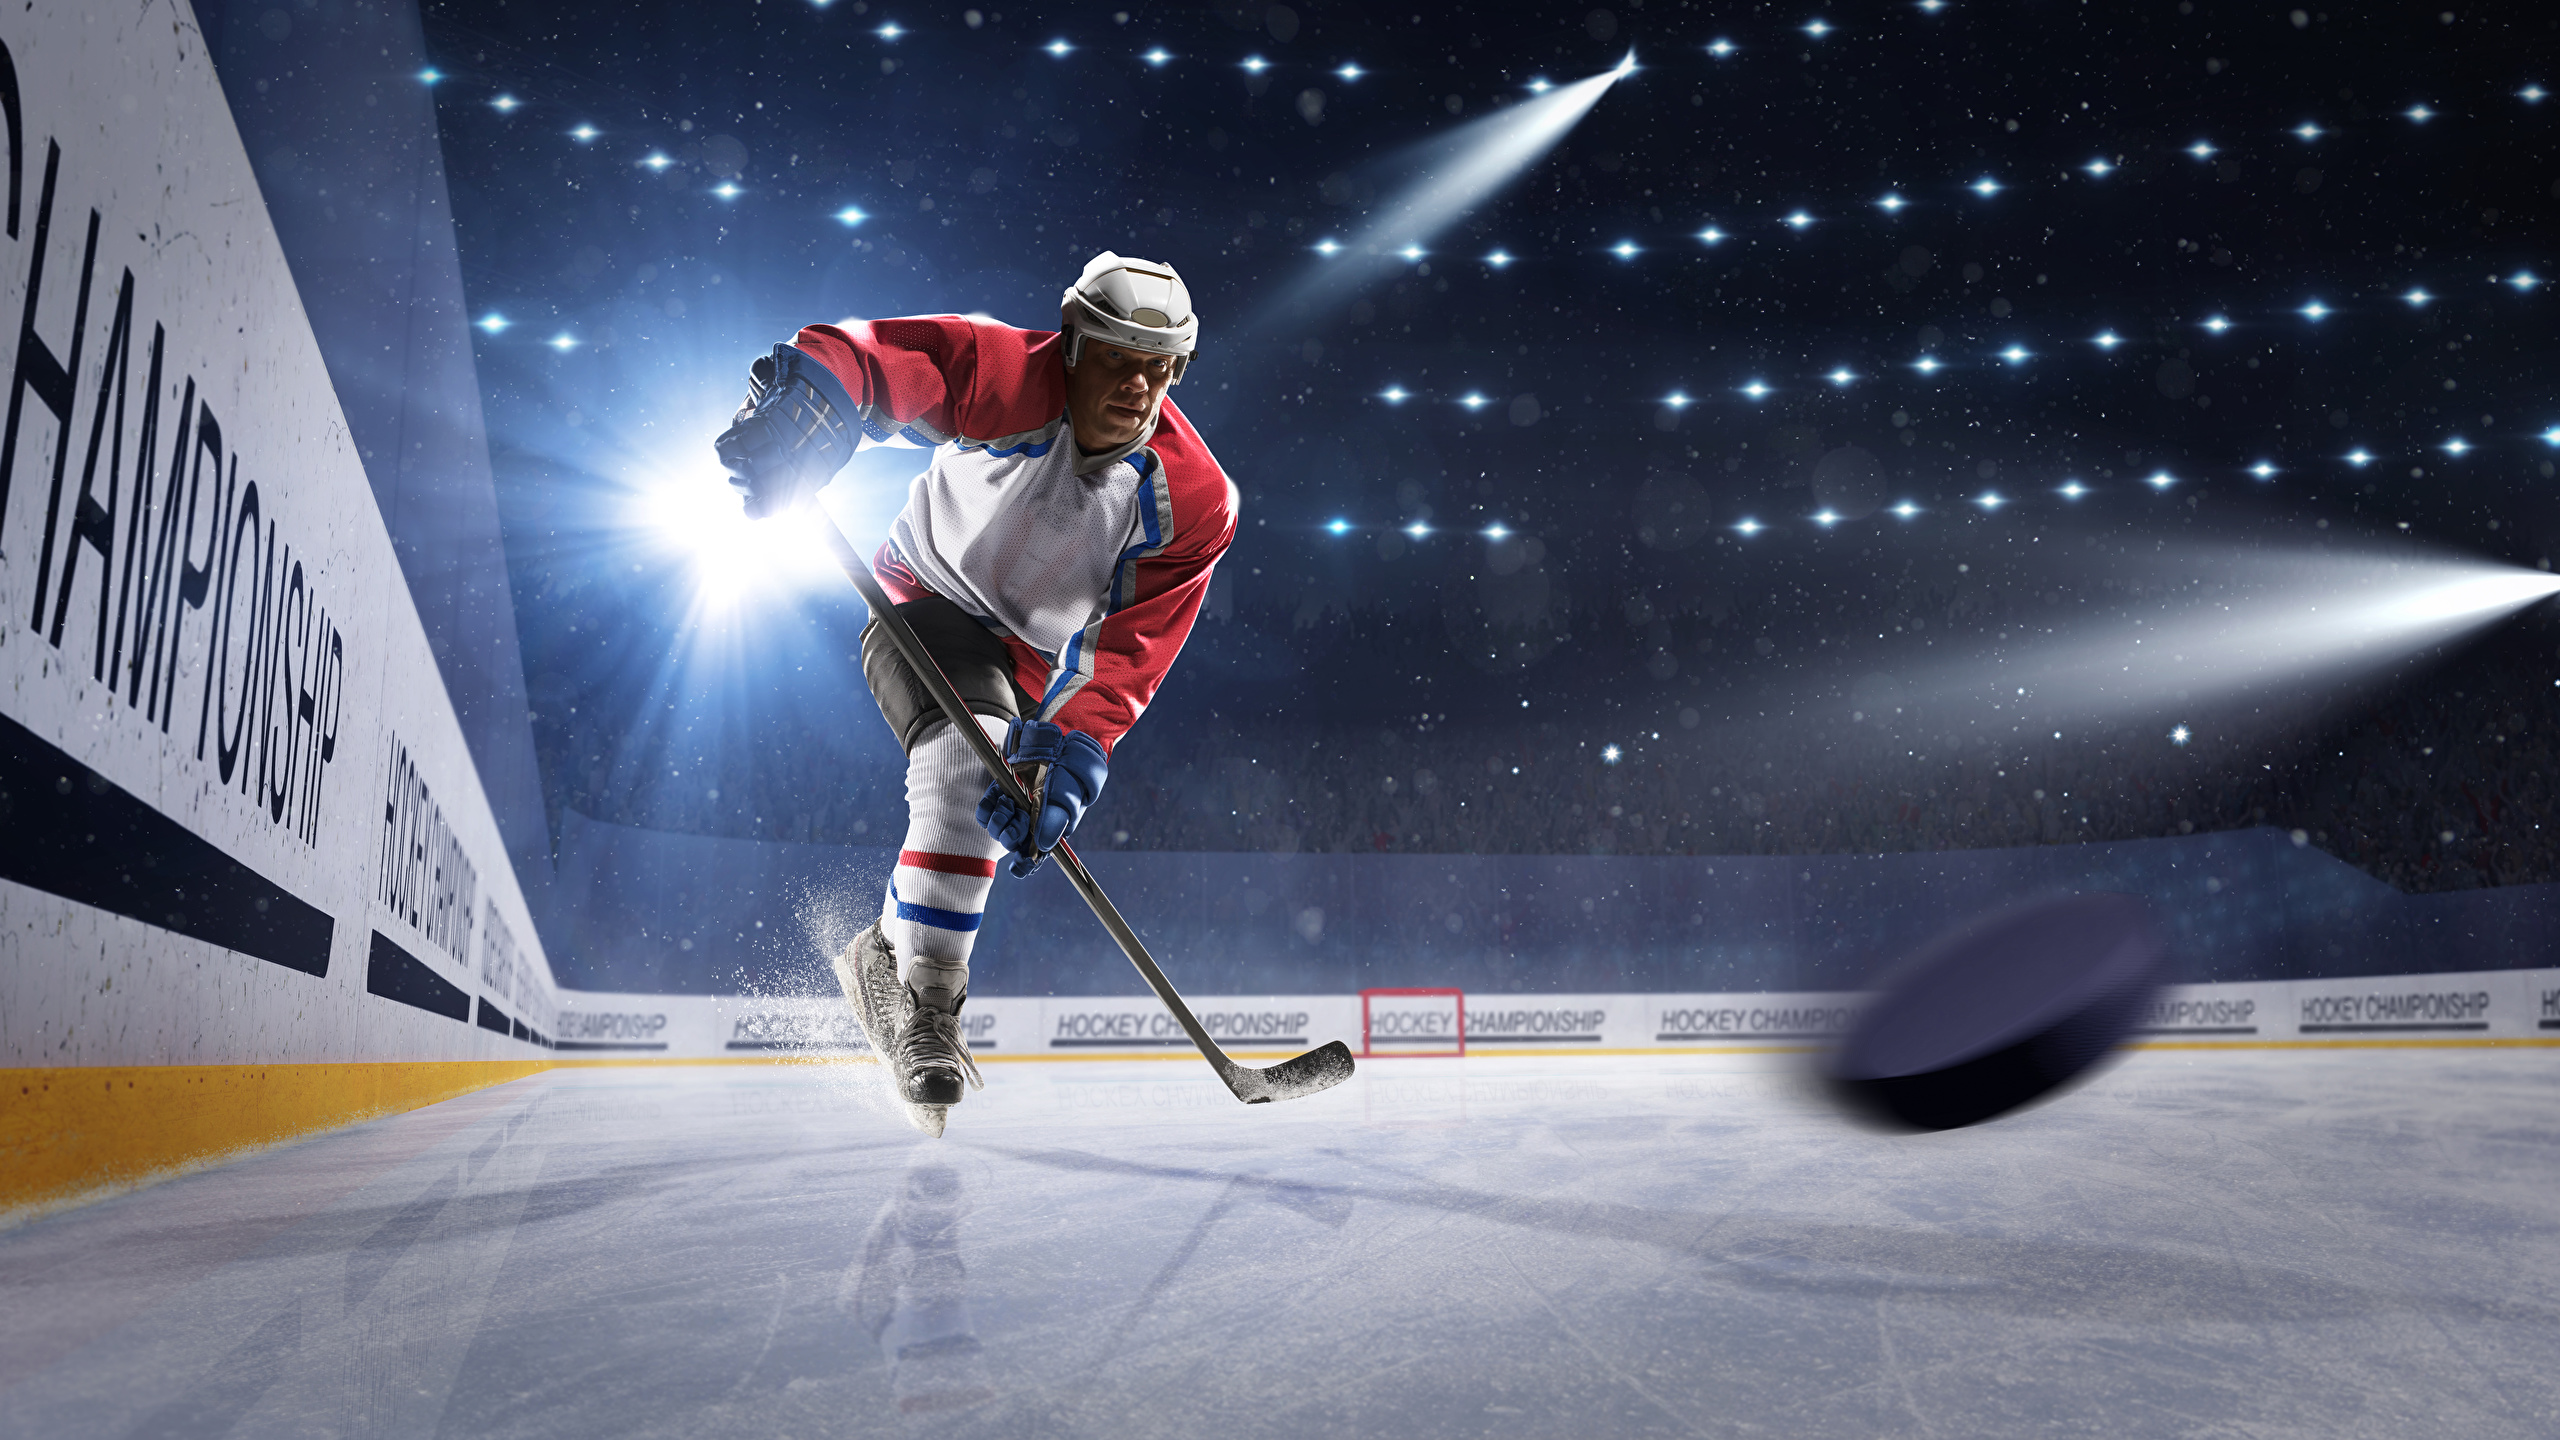 Image Rays Of Light Men Helmet Ice Rink Sport Hockey